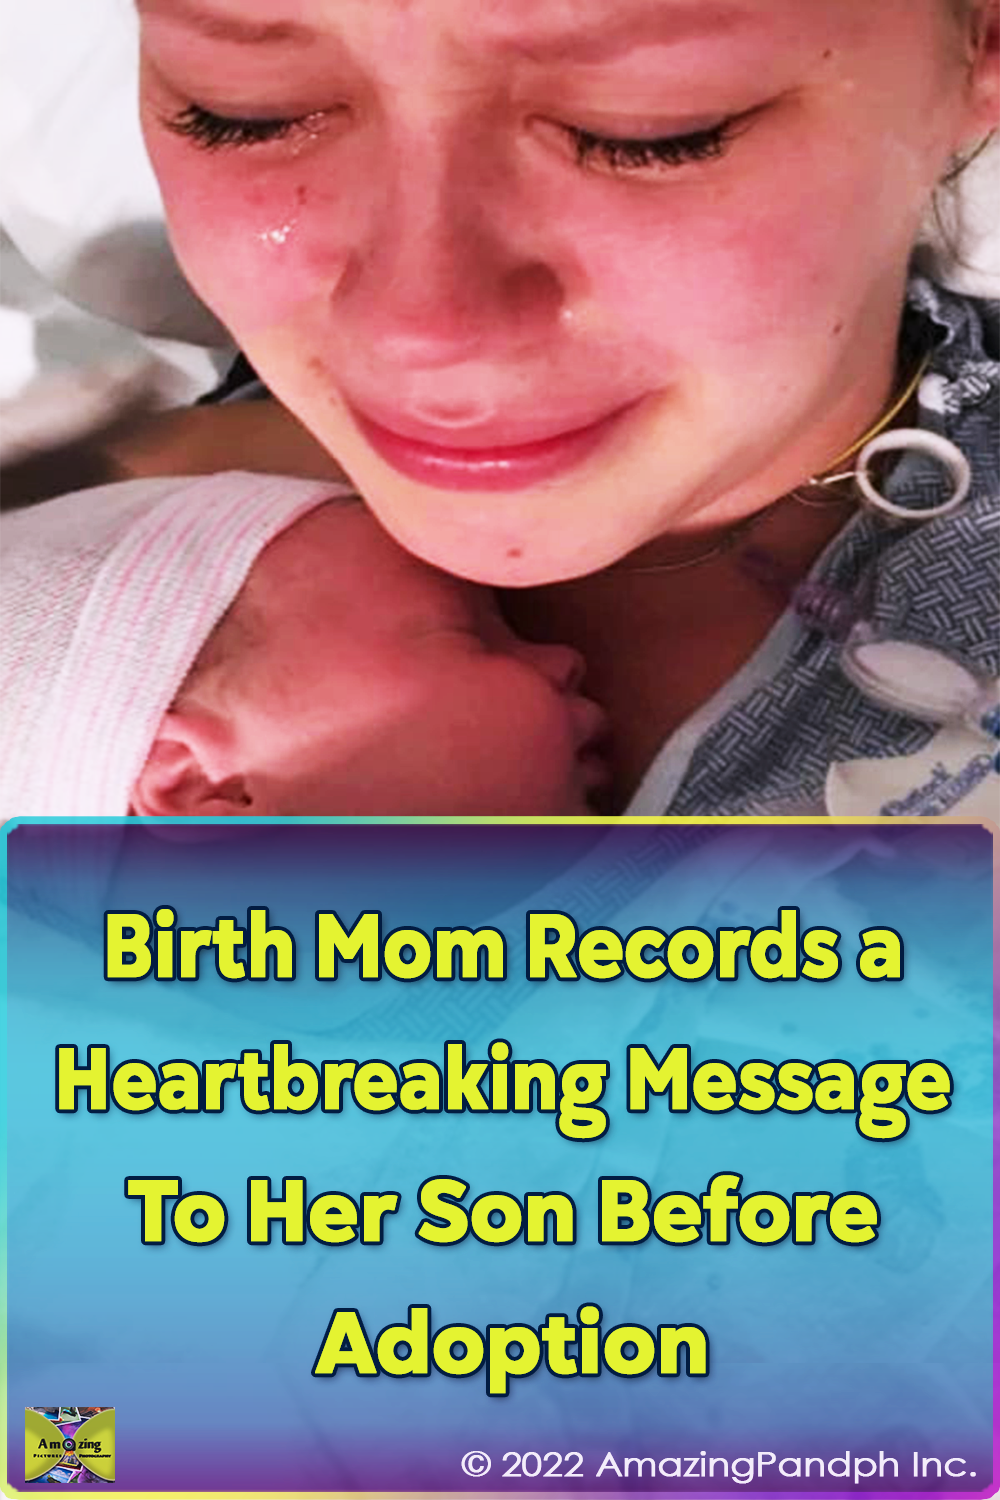 birth, adoption, message, emotional, mom, son, heartbreaking, UTAH,